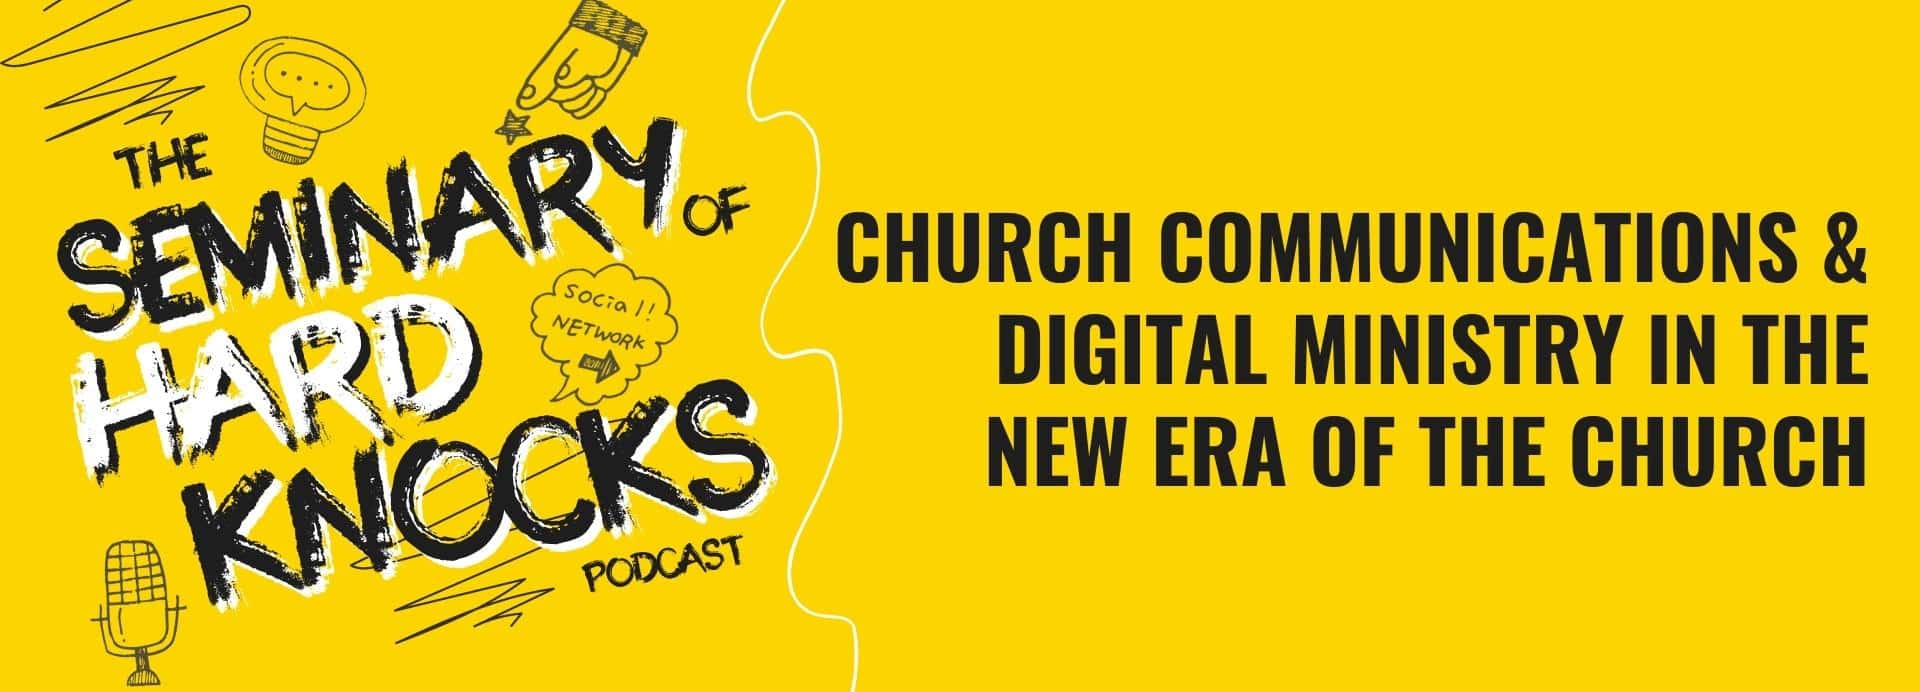 The Seminary of Hard Knocks Podcast, Seth Muse, Meagan Ranson, Church Communications, Digital Ministry